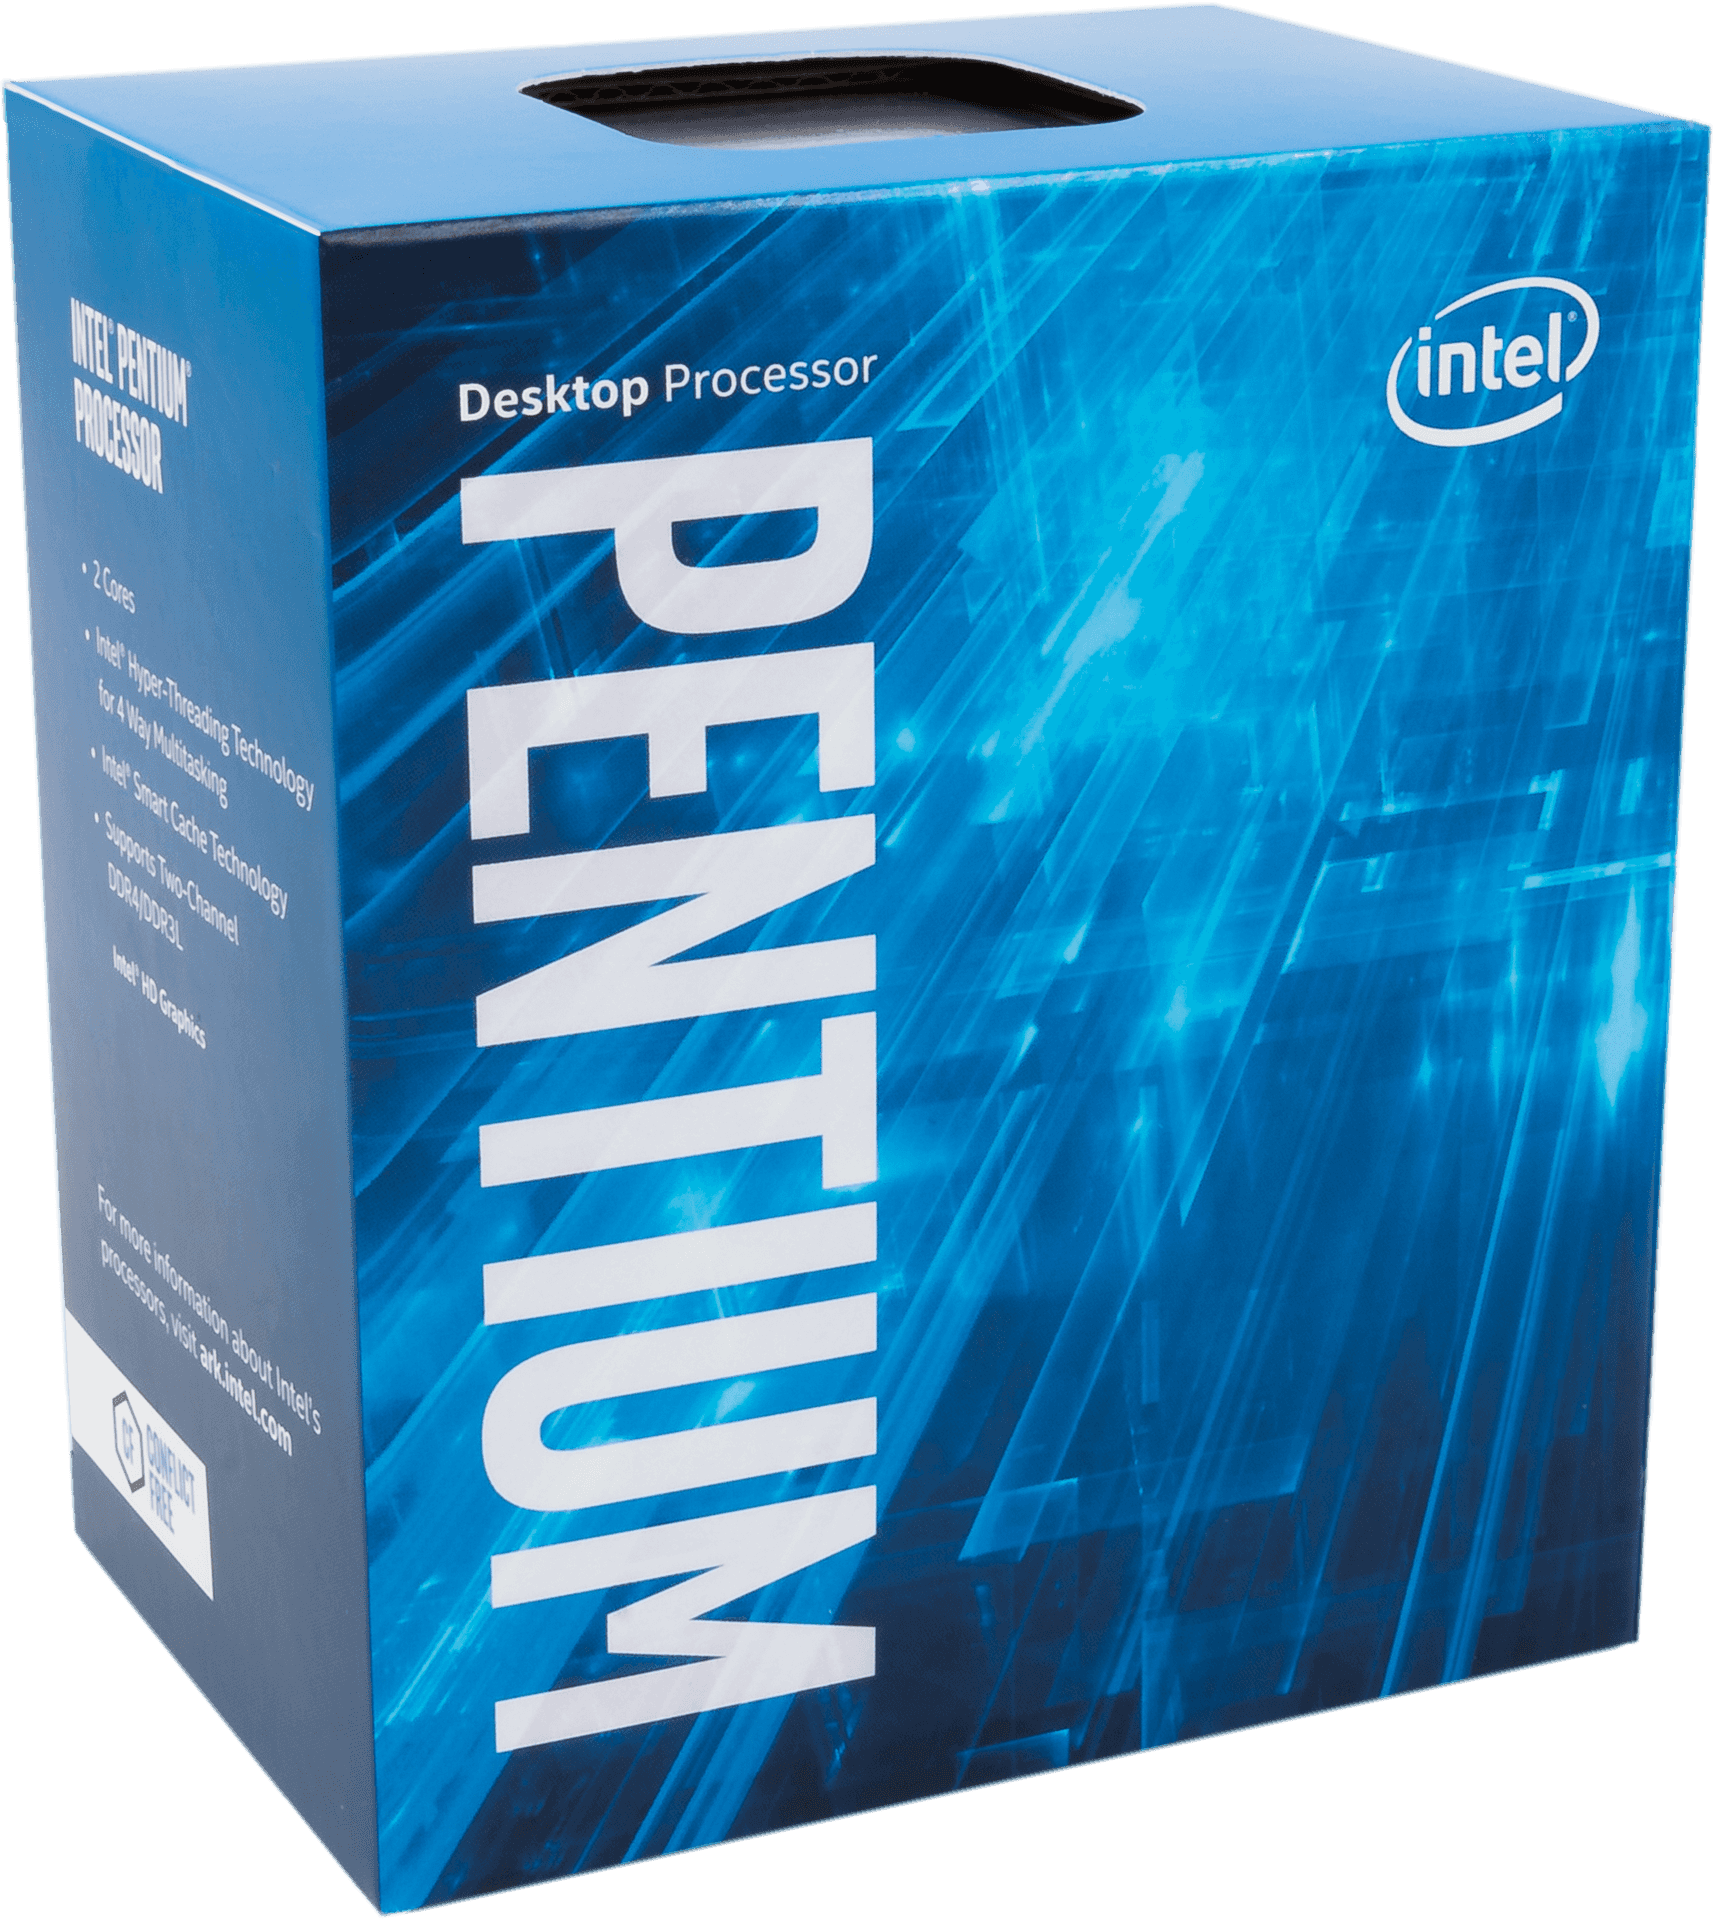 Intel Pentium Desktop Processor Box PNG